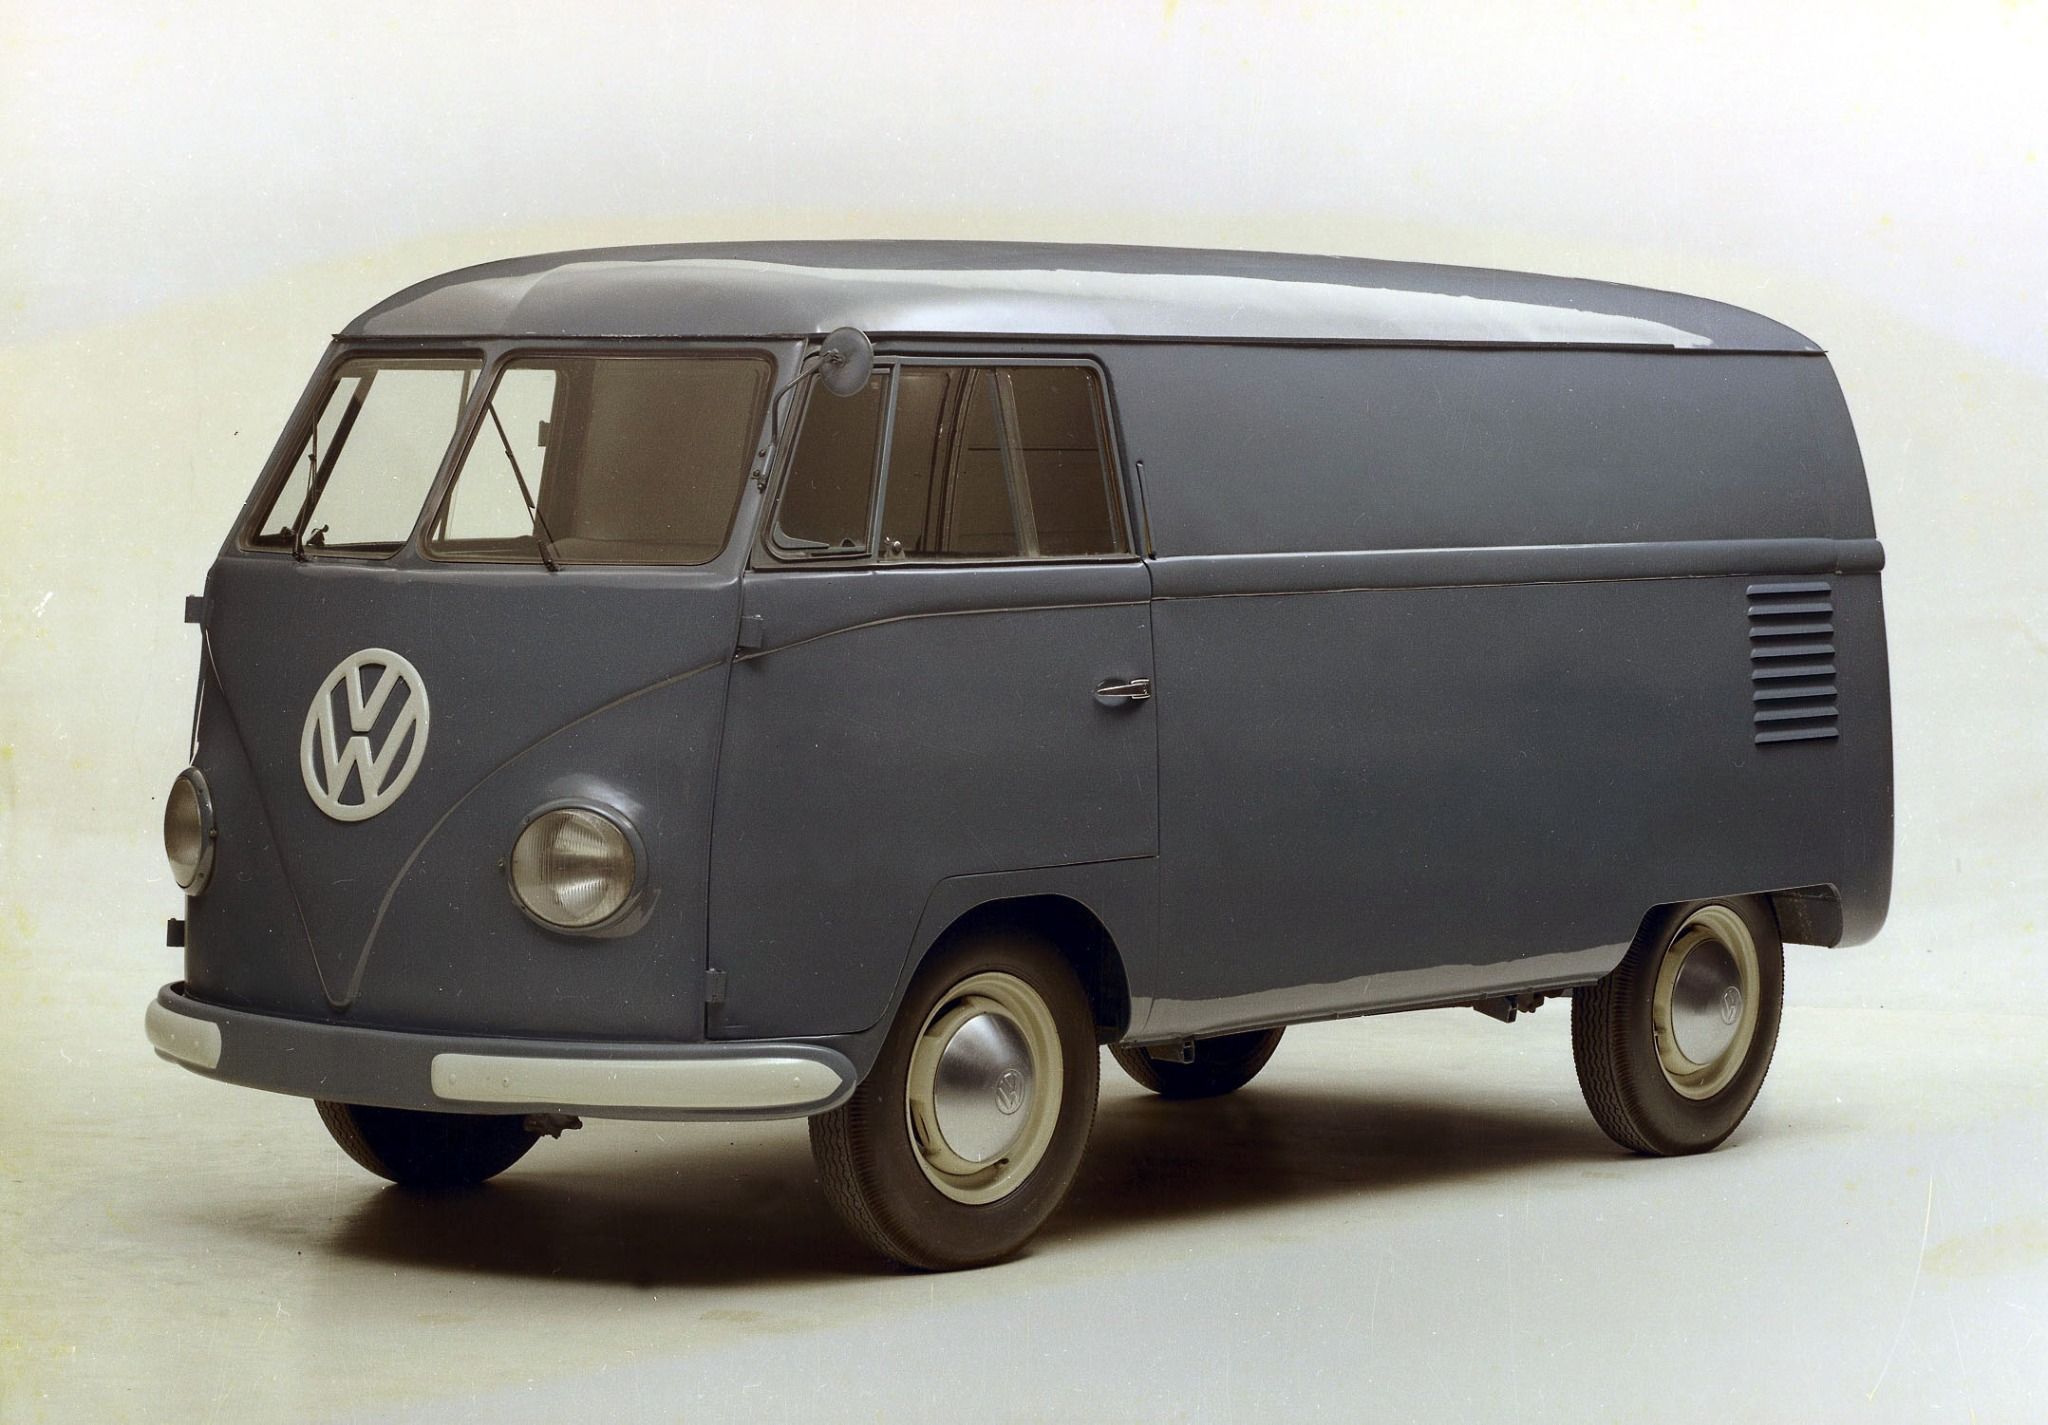 Volkswagen Transporter History 4